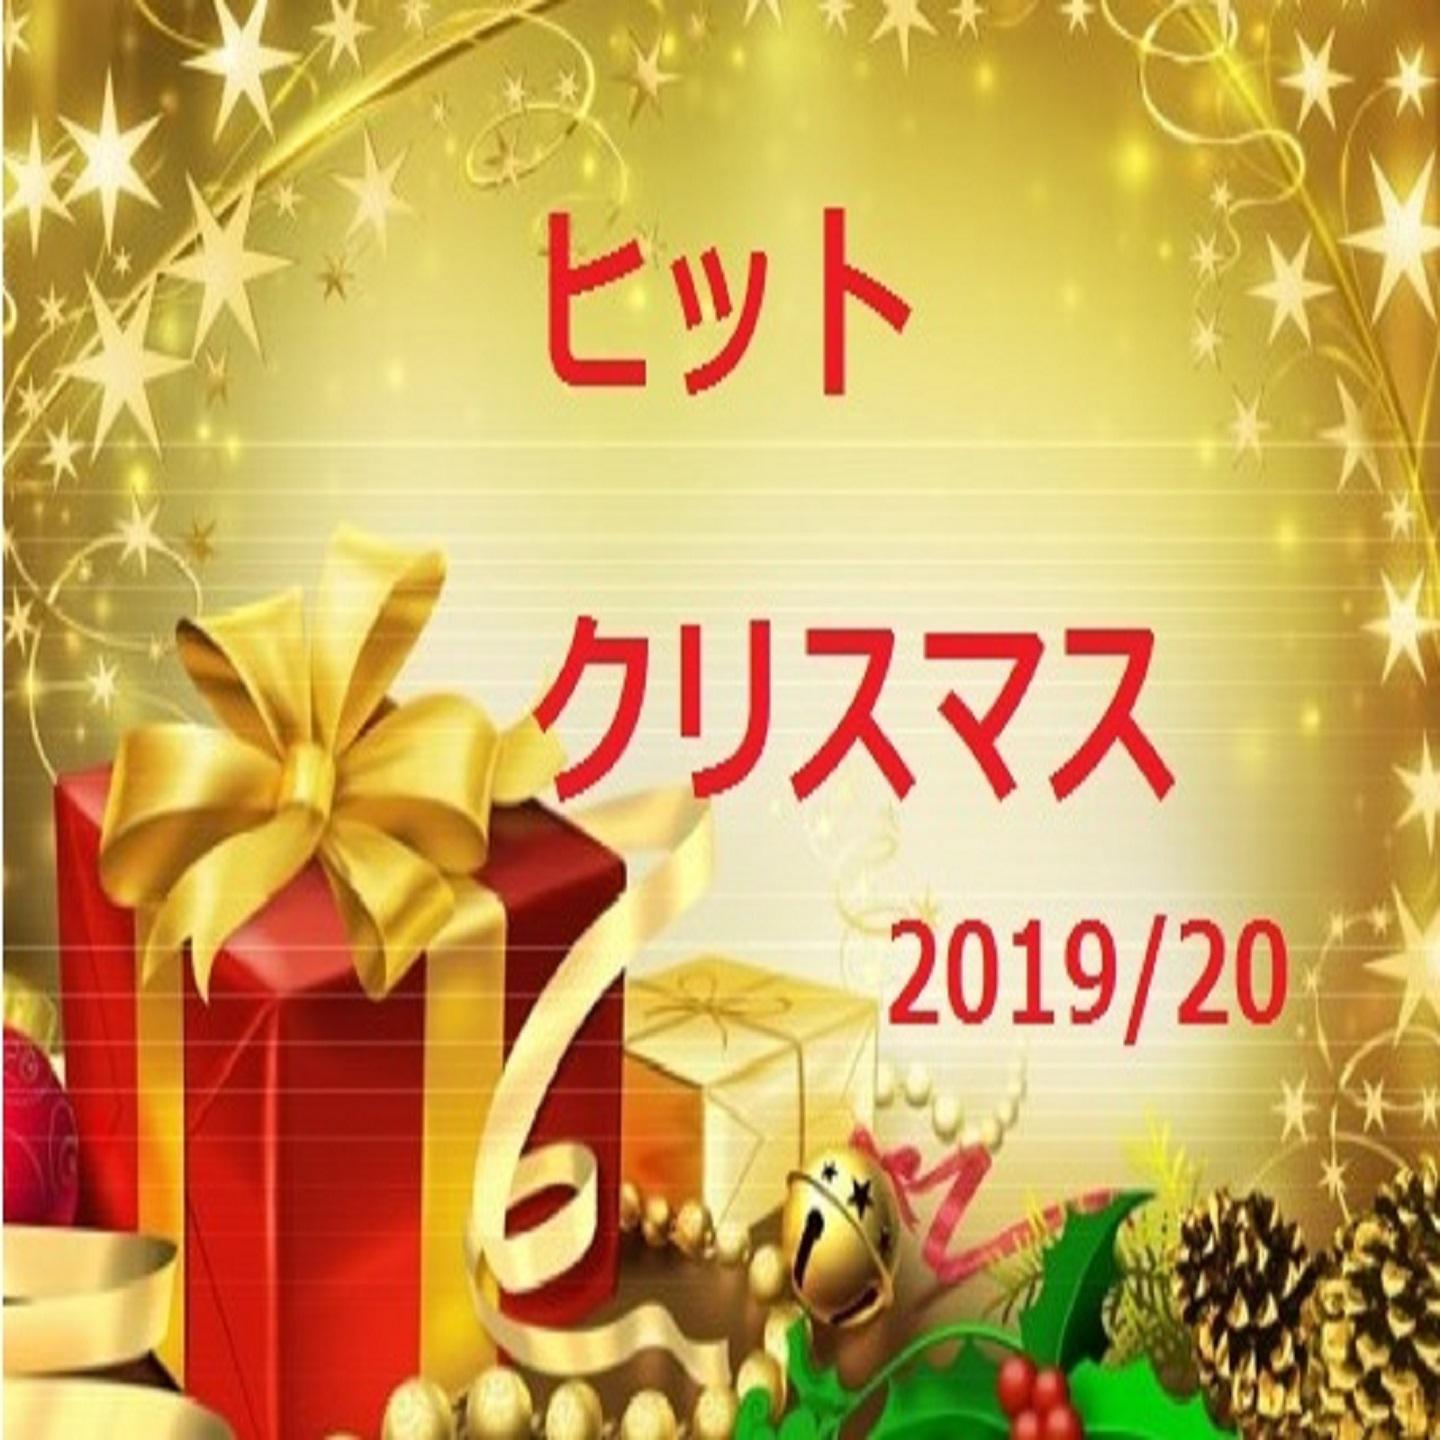 Buon Natale  2019 20